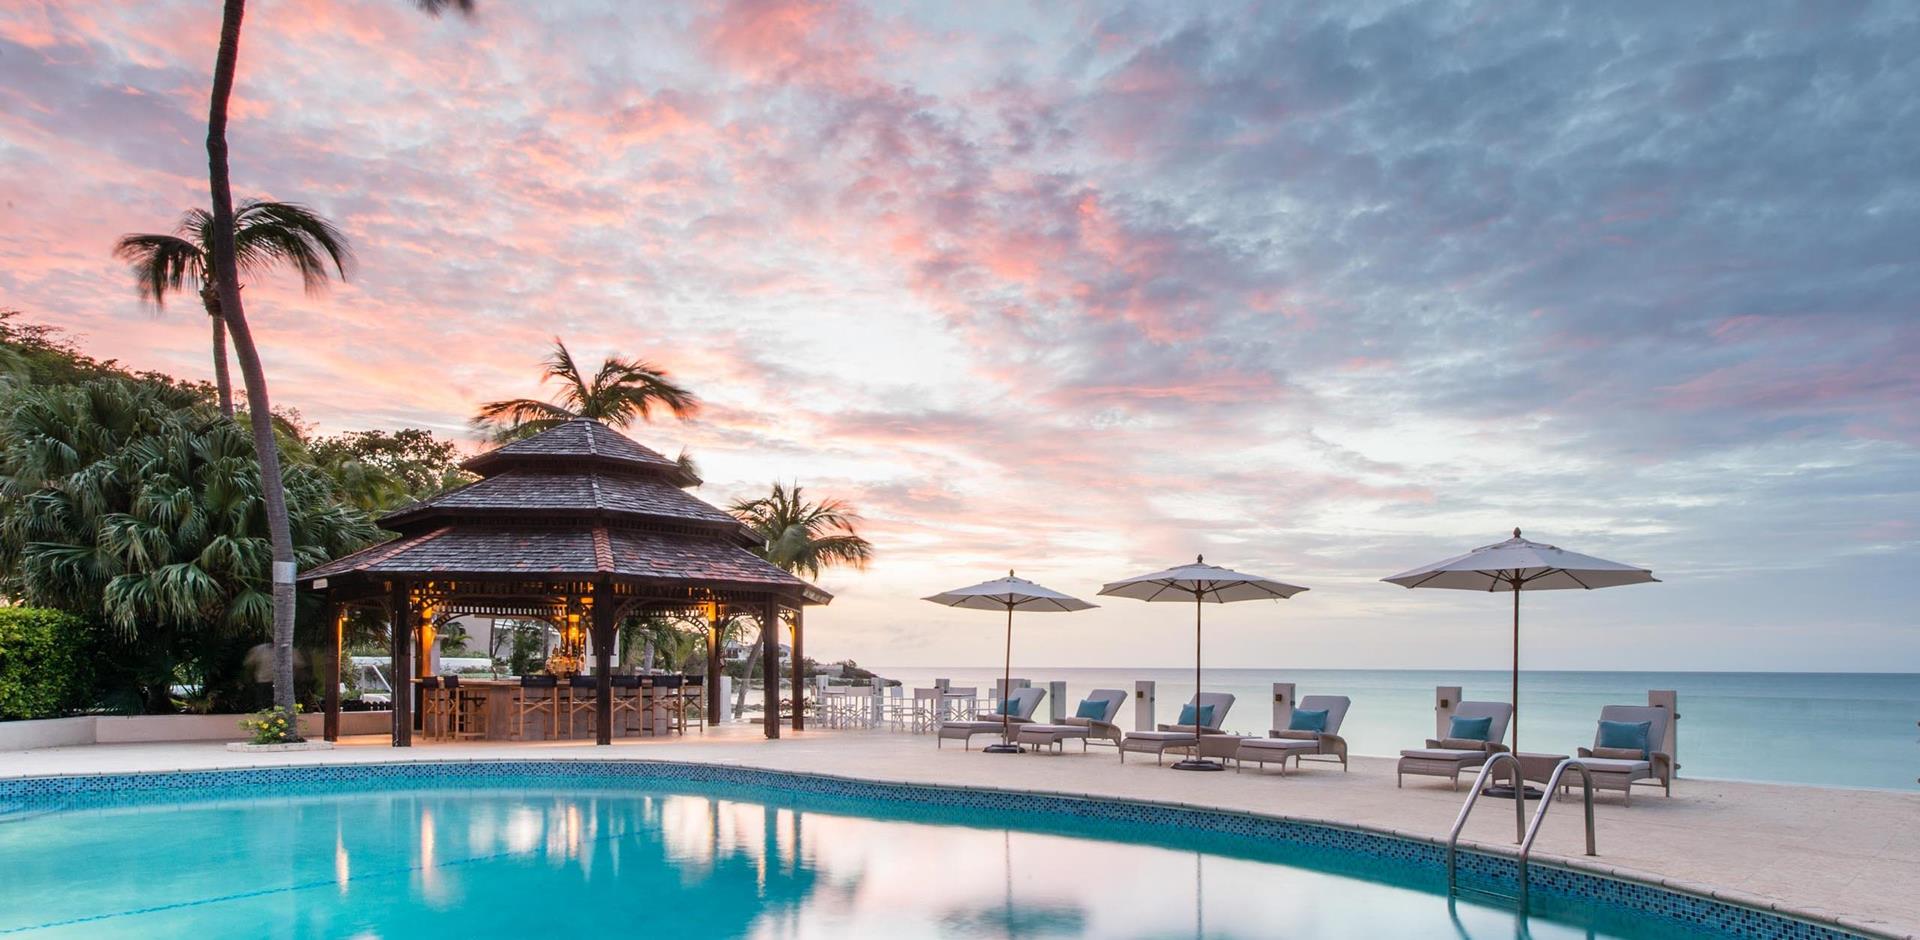 Blue Waters Resort & Spa, Antigua, Caribbean, A&K